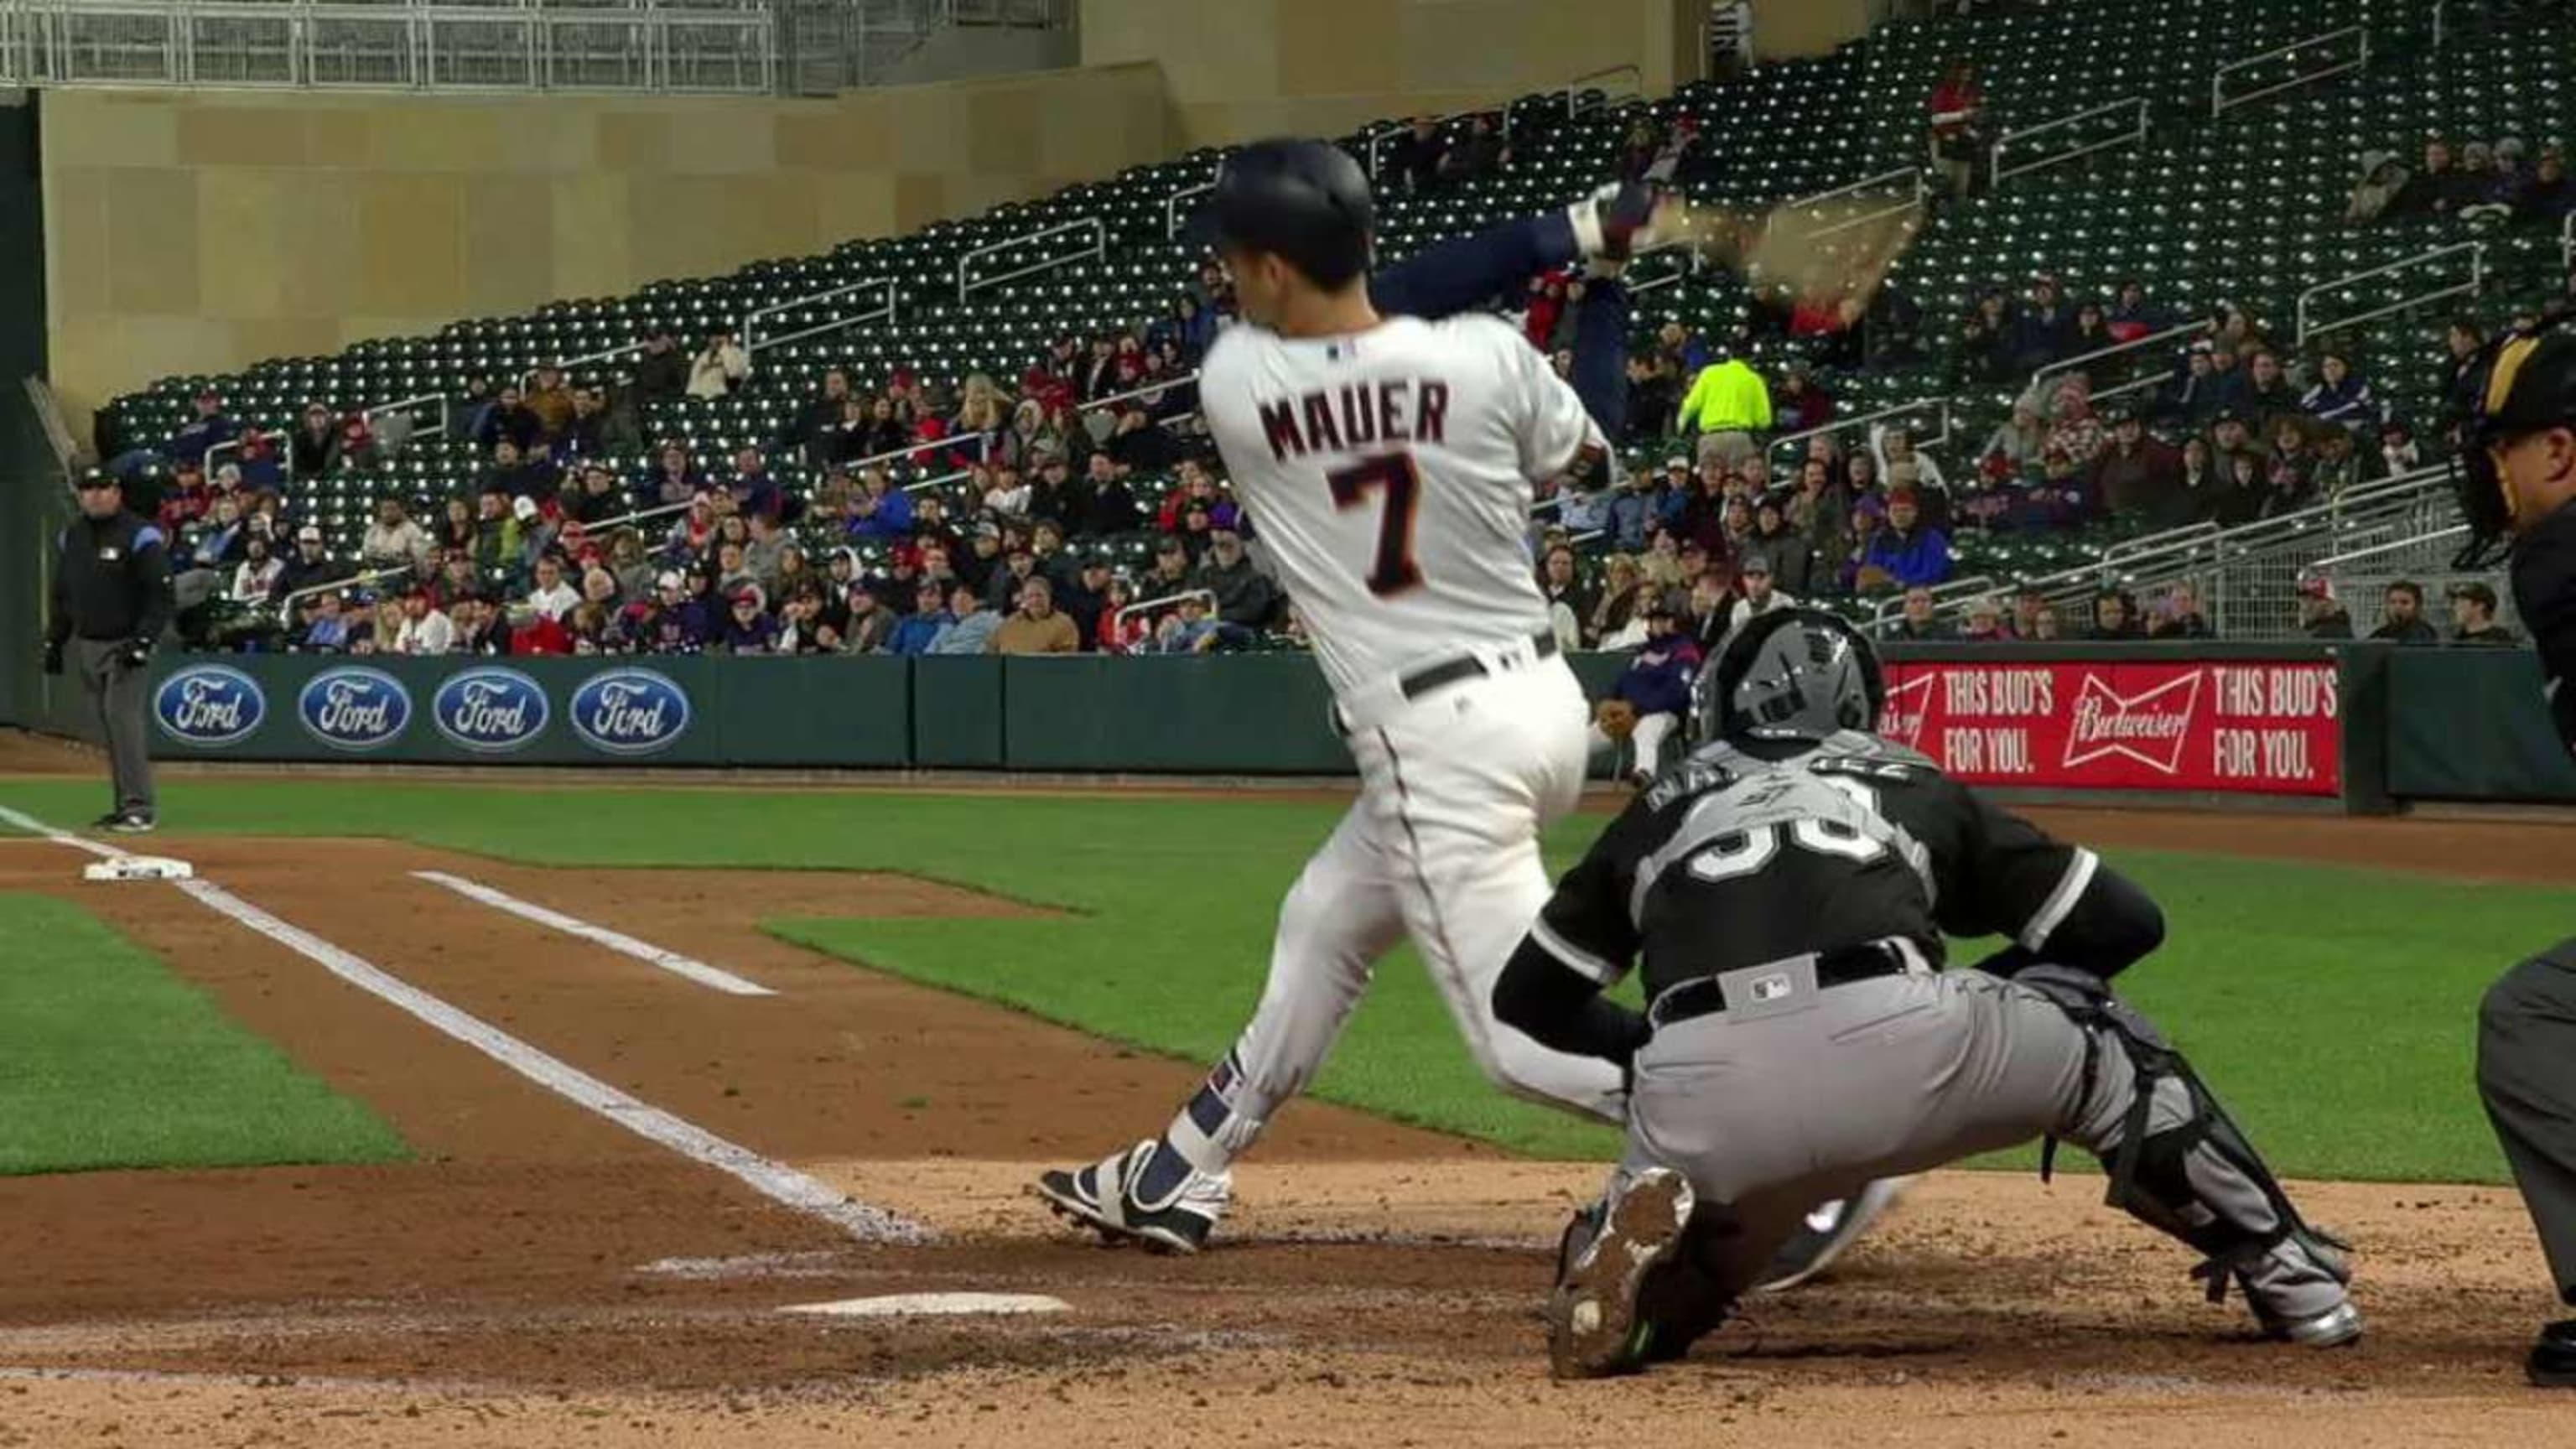 MLB on FOX - Well played, Mauer. Congrats to the Minnesota Twins Joe Mauer  on 2,000 career hits!